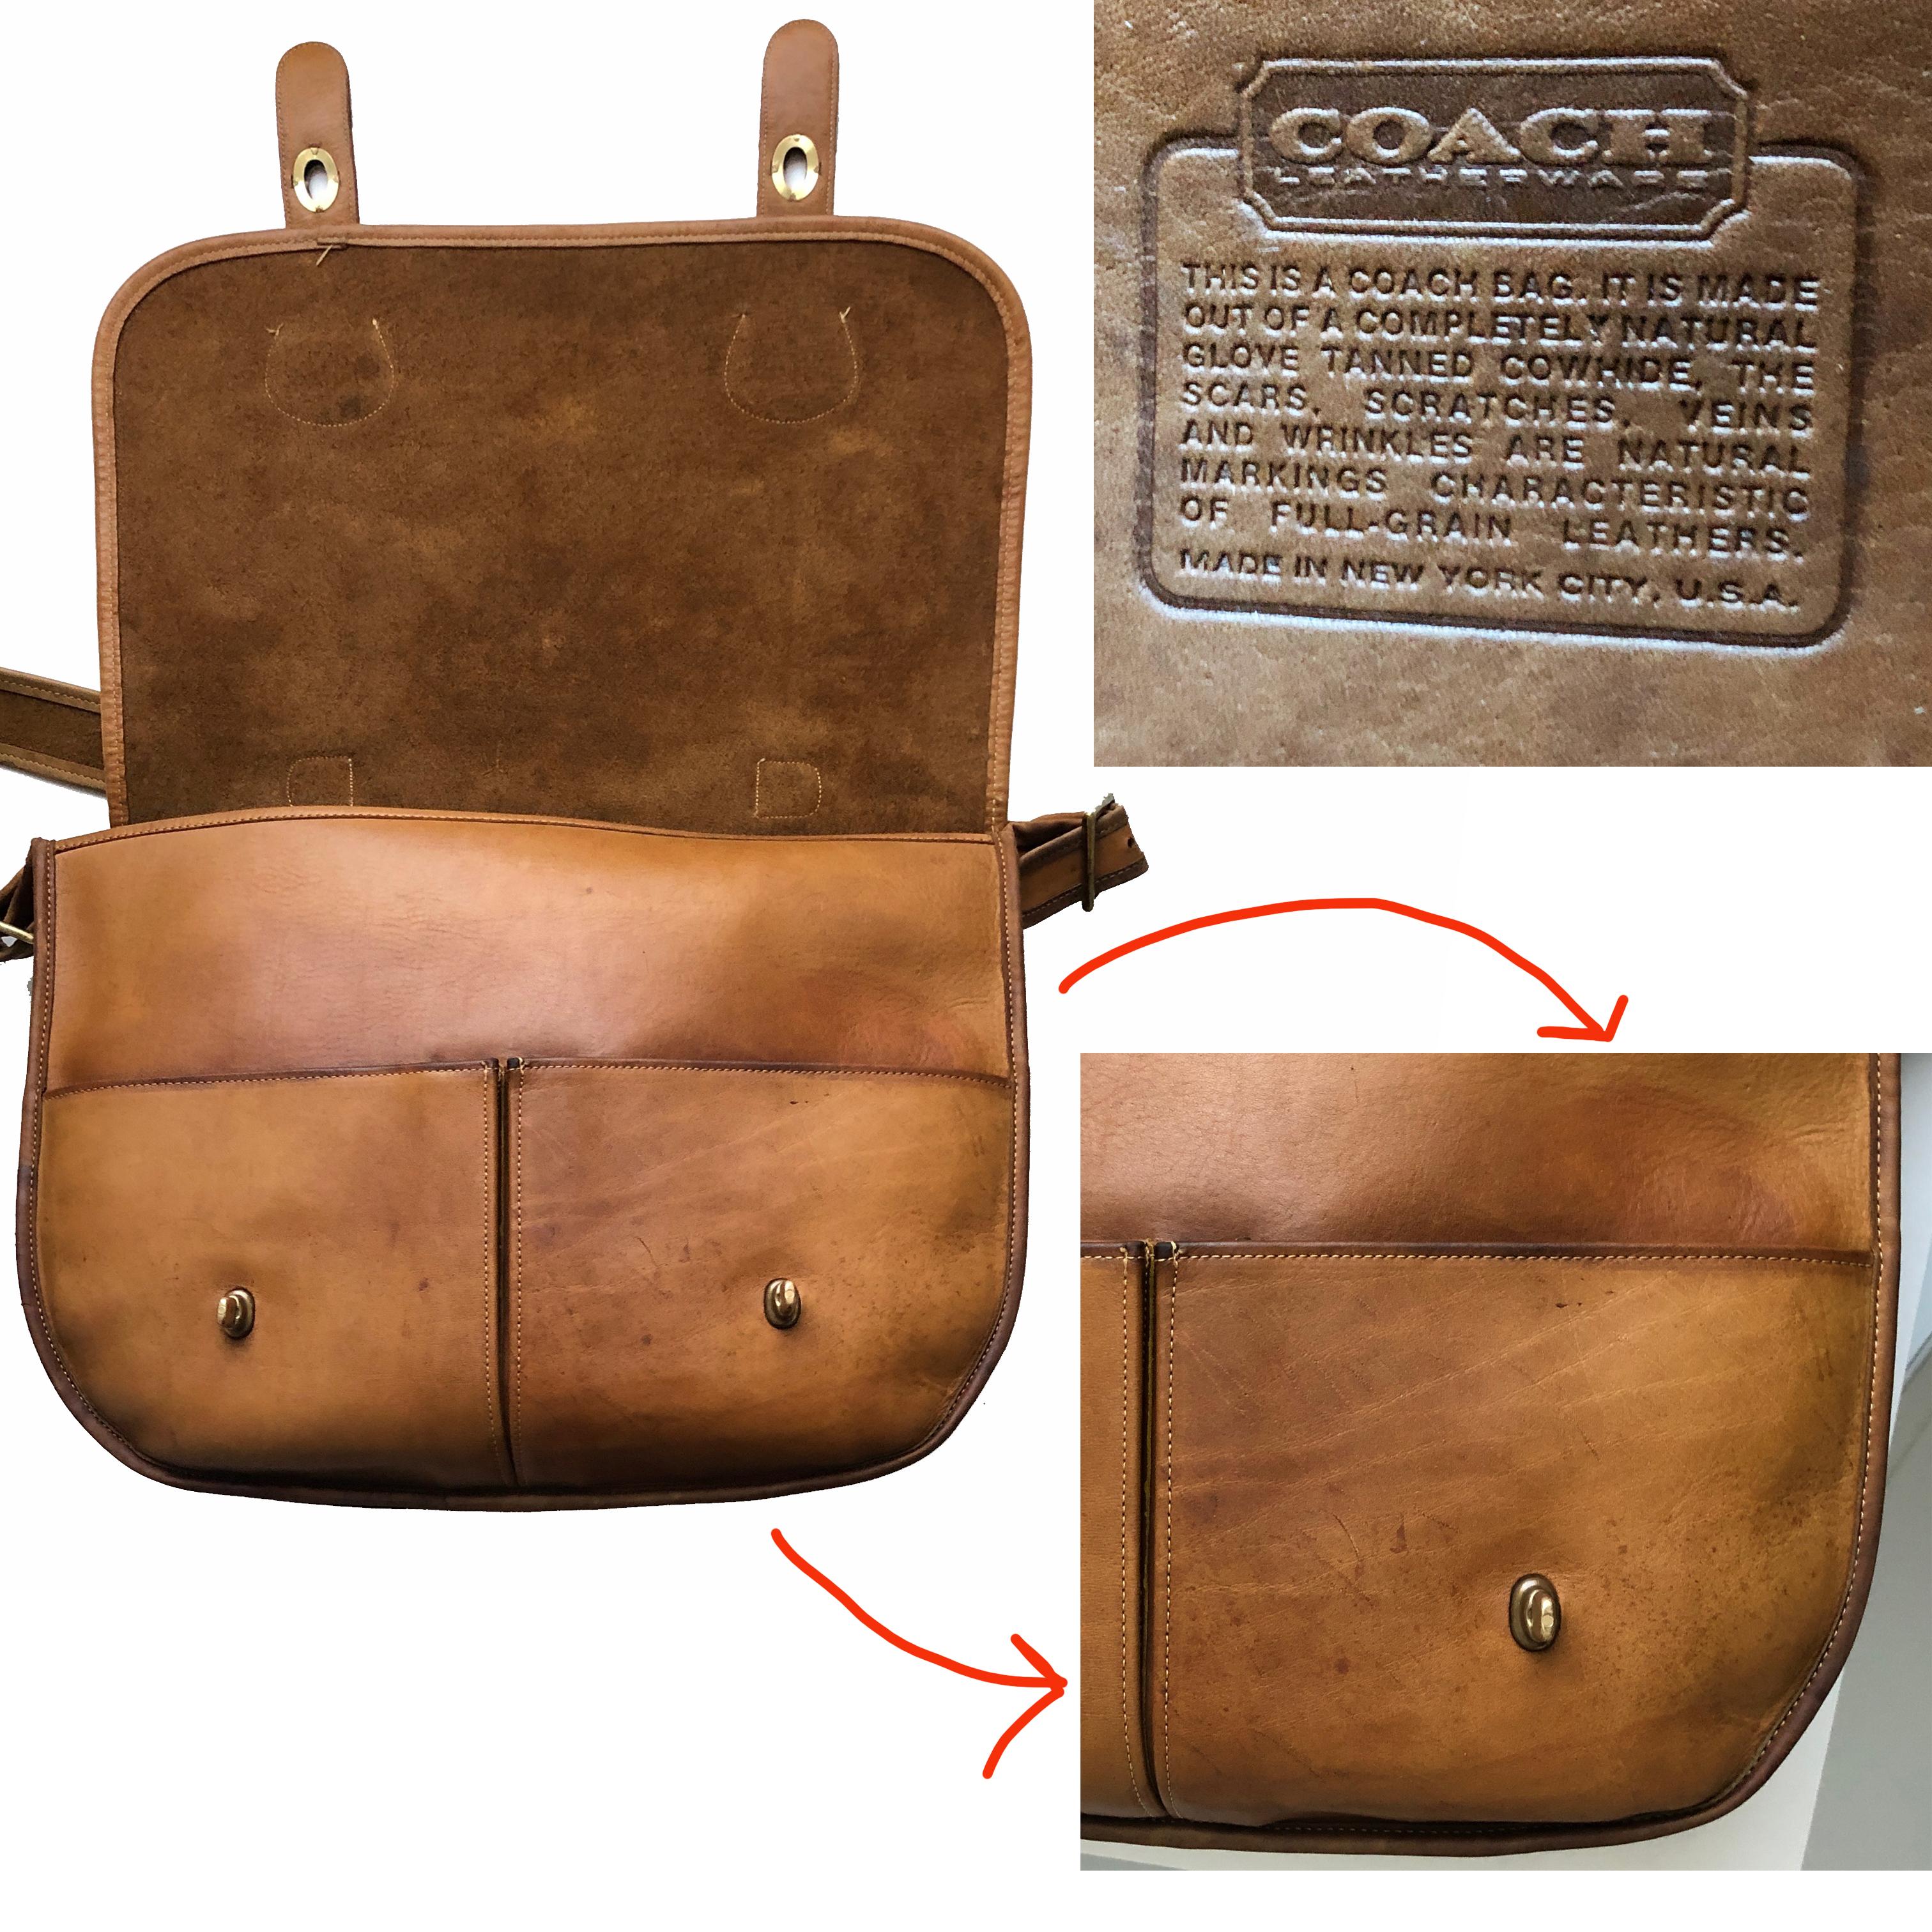 Coach Swag Bag Bonnie Cashin Large Leather Messenger Vintage 60s NYC Bag Rare  1